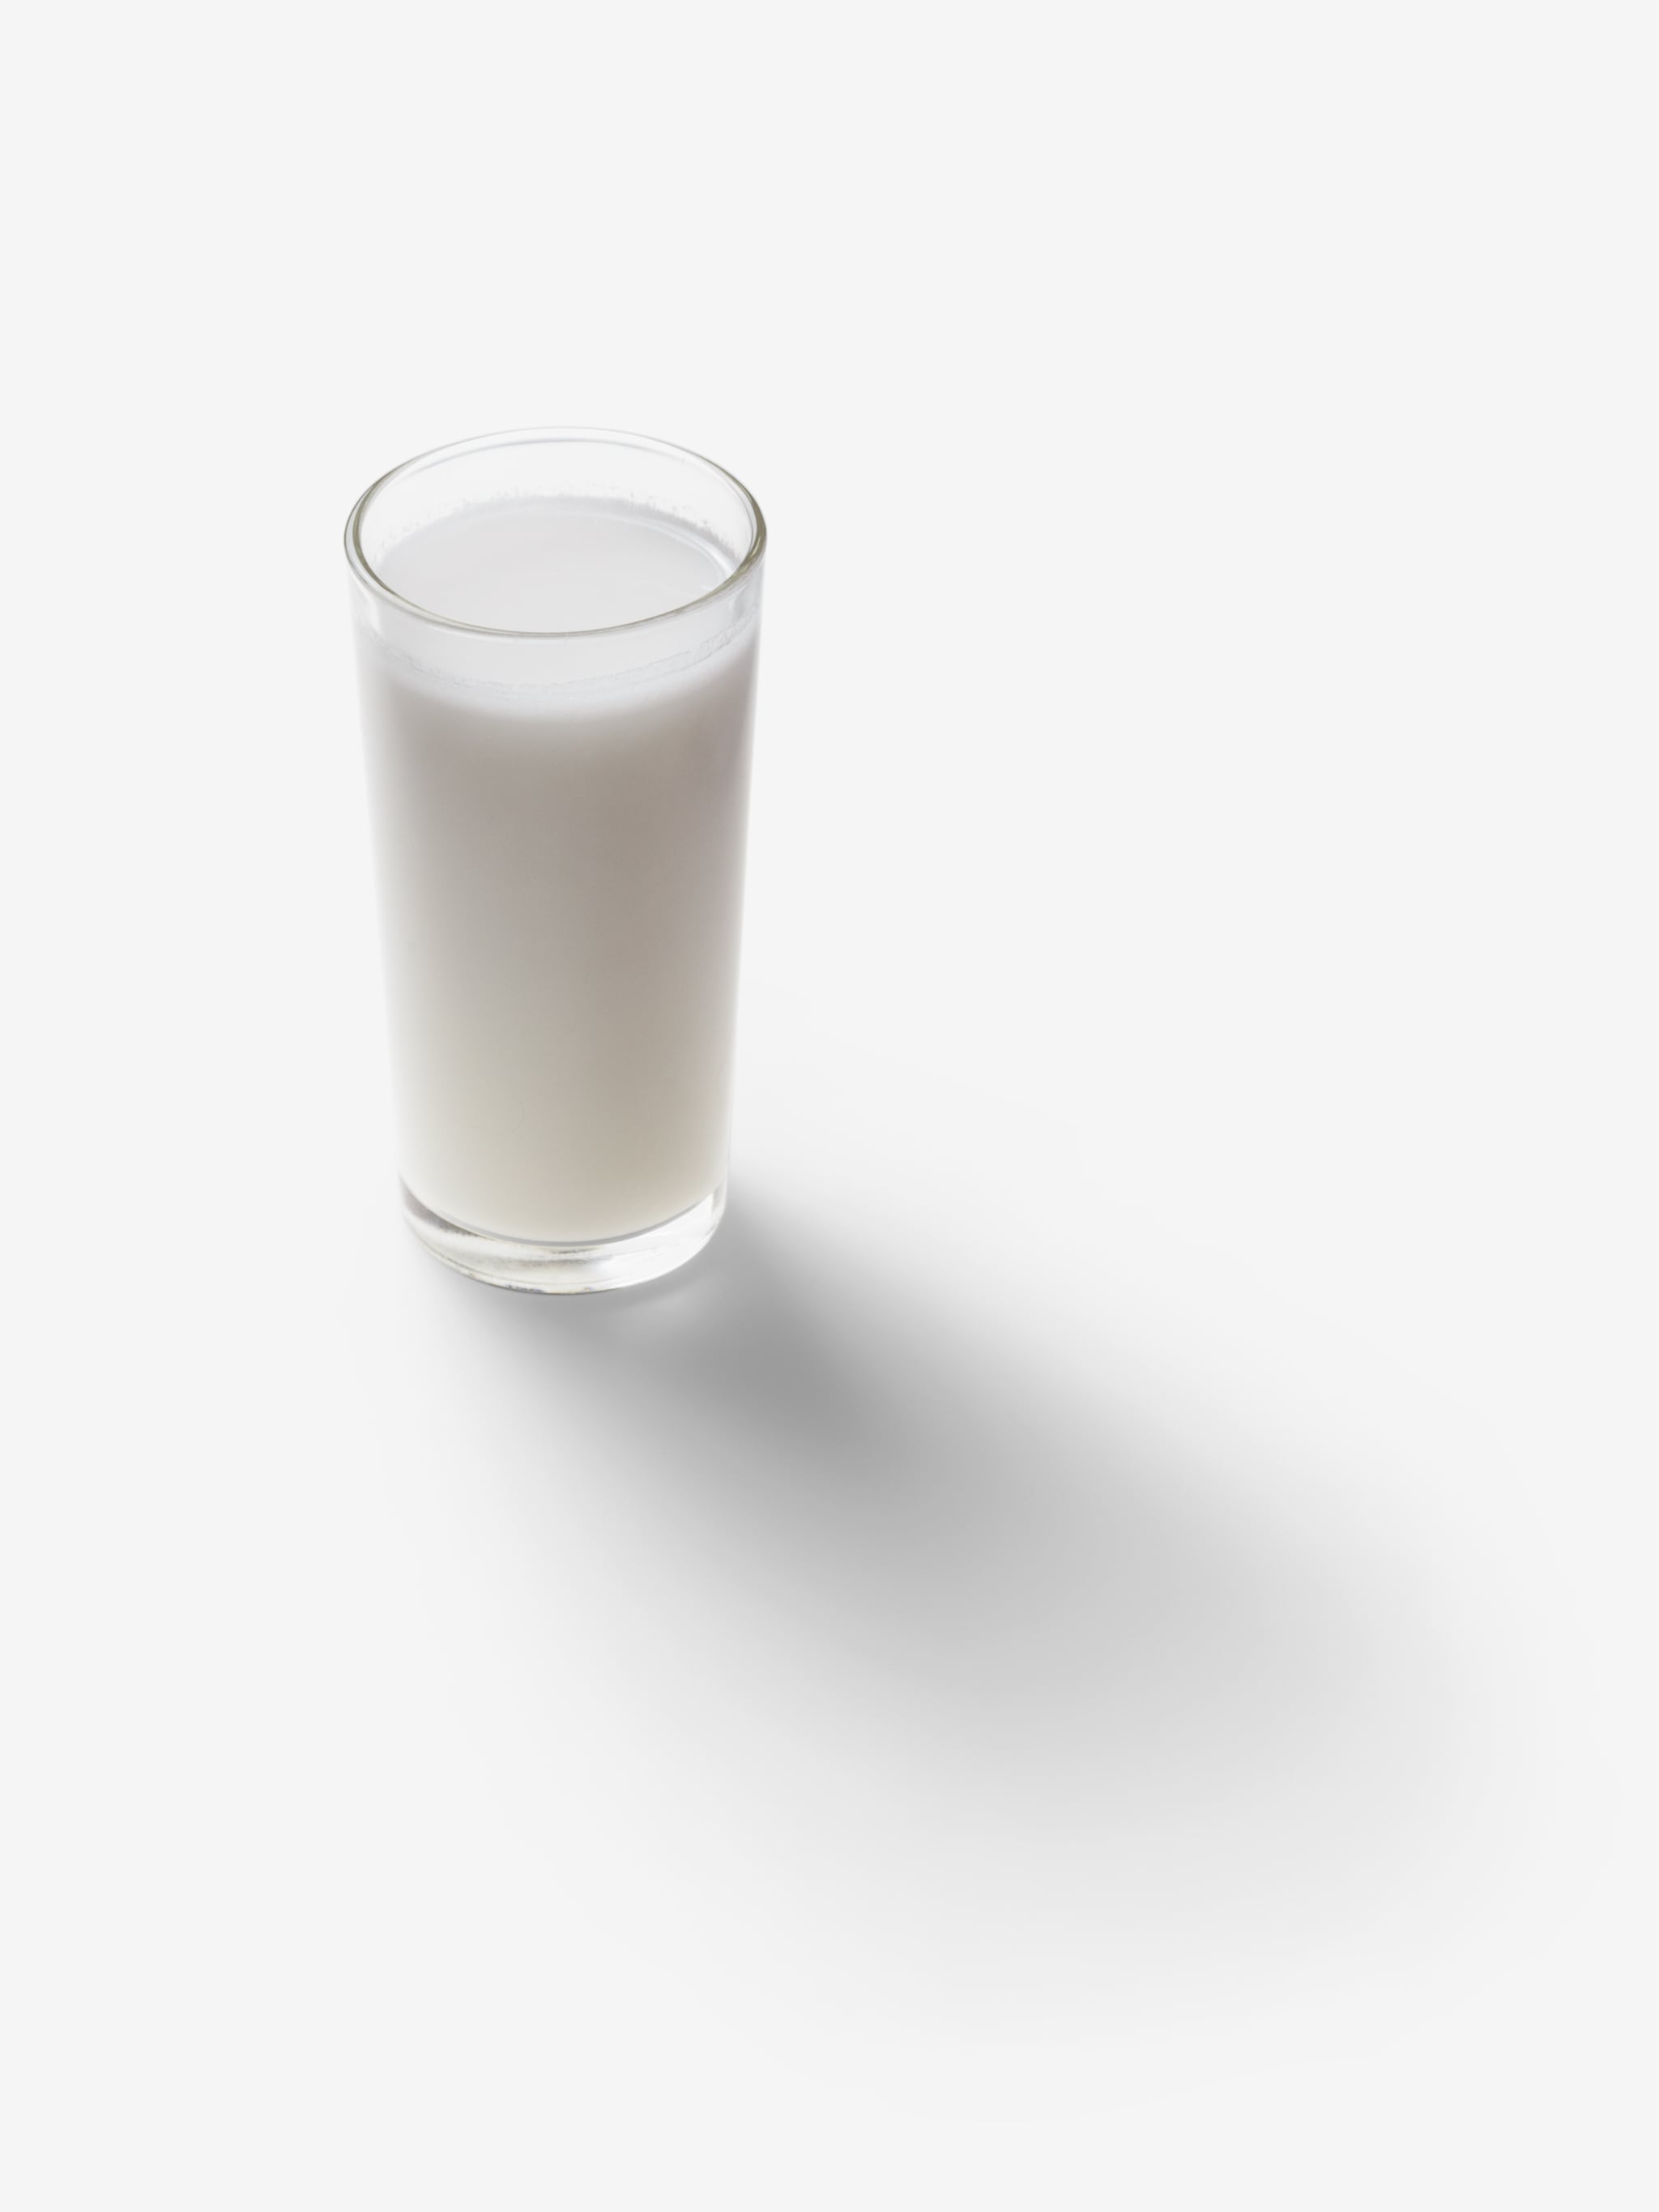 Coconut milk image asset with transparent background